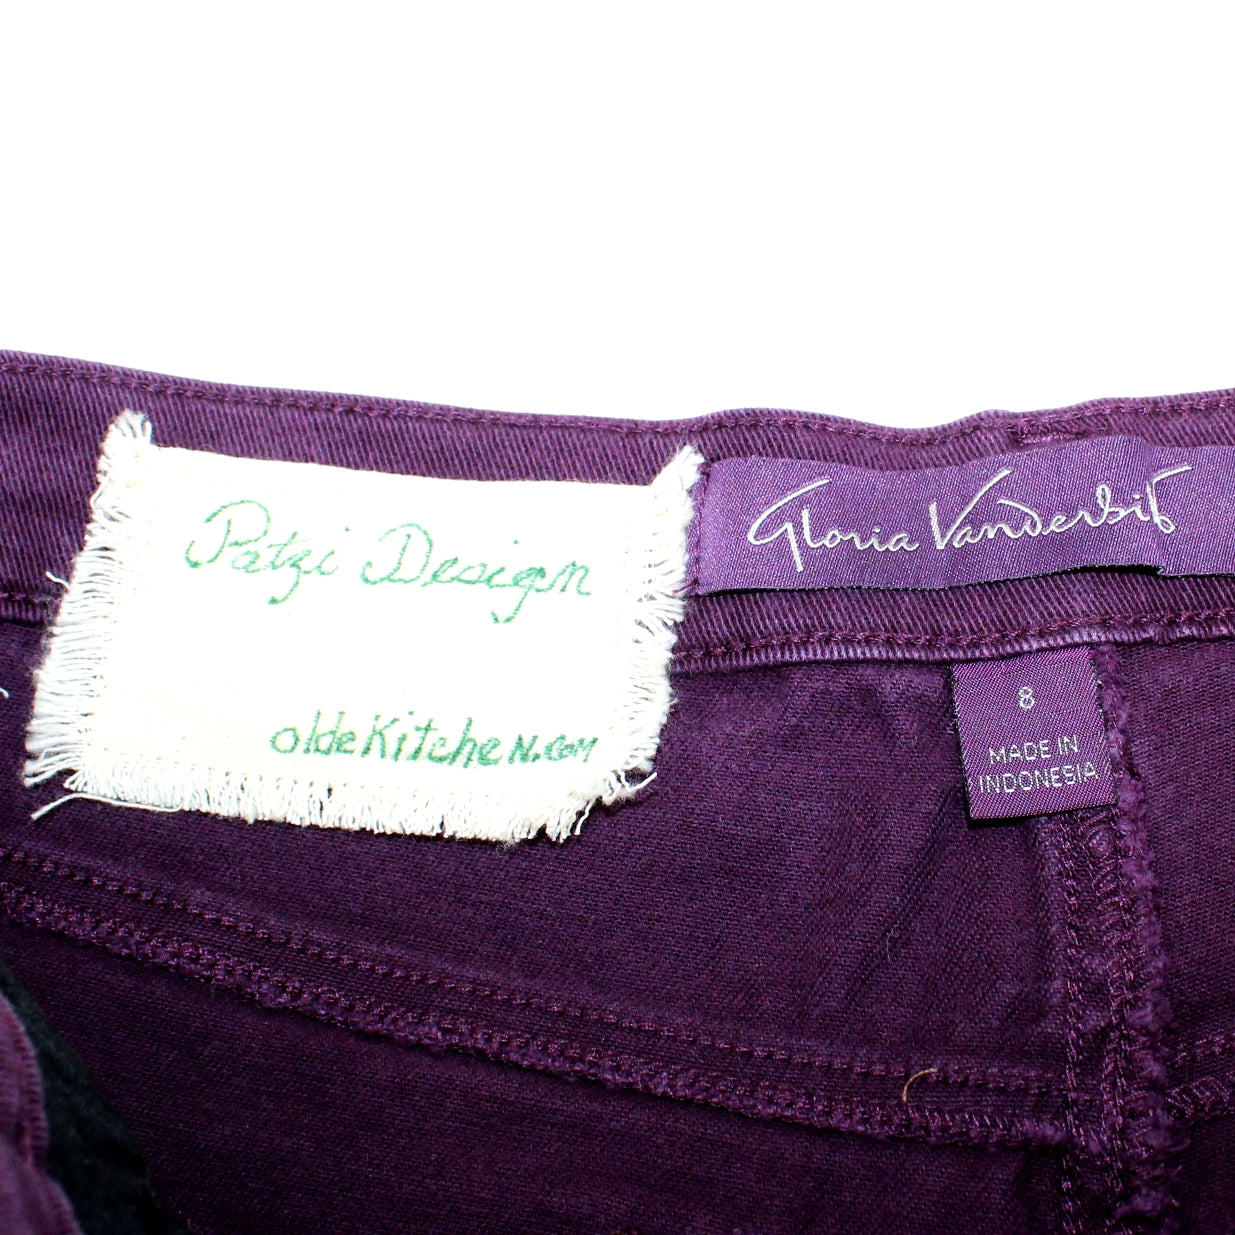 Gloria Vanderbilt Purple Jeans Patzi Design Embroidery Flower Basket Size 8 Short maker and patzi tags